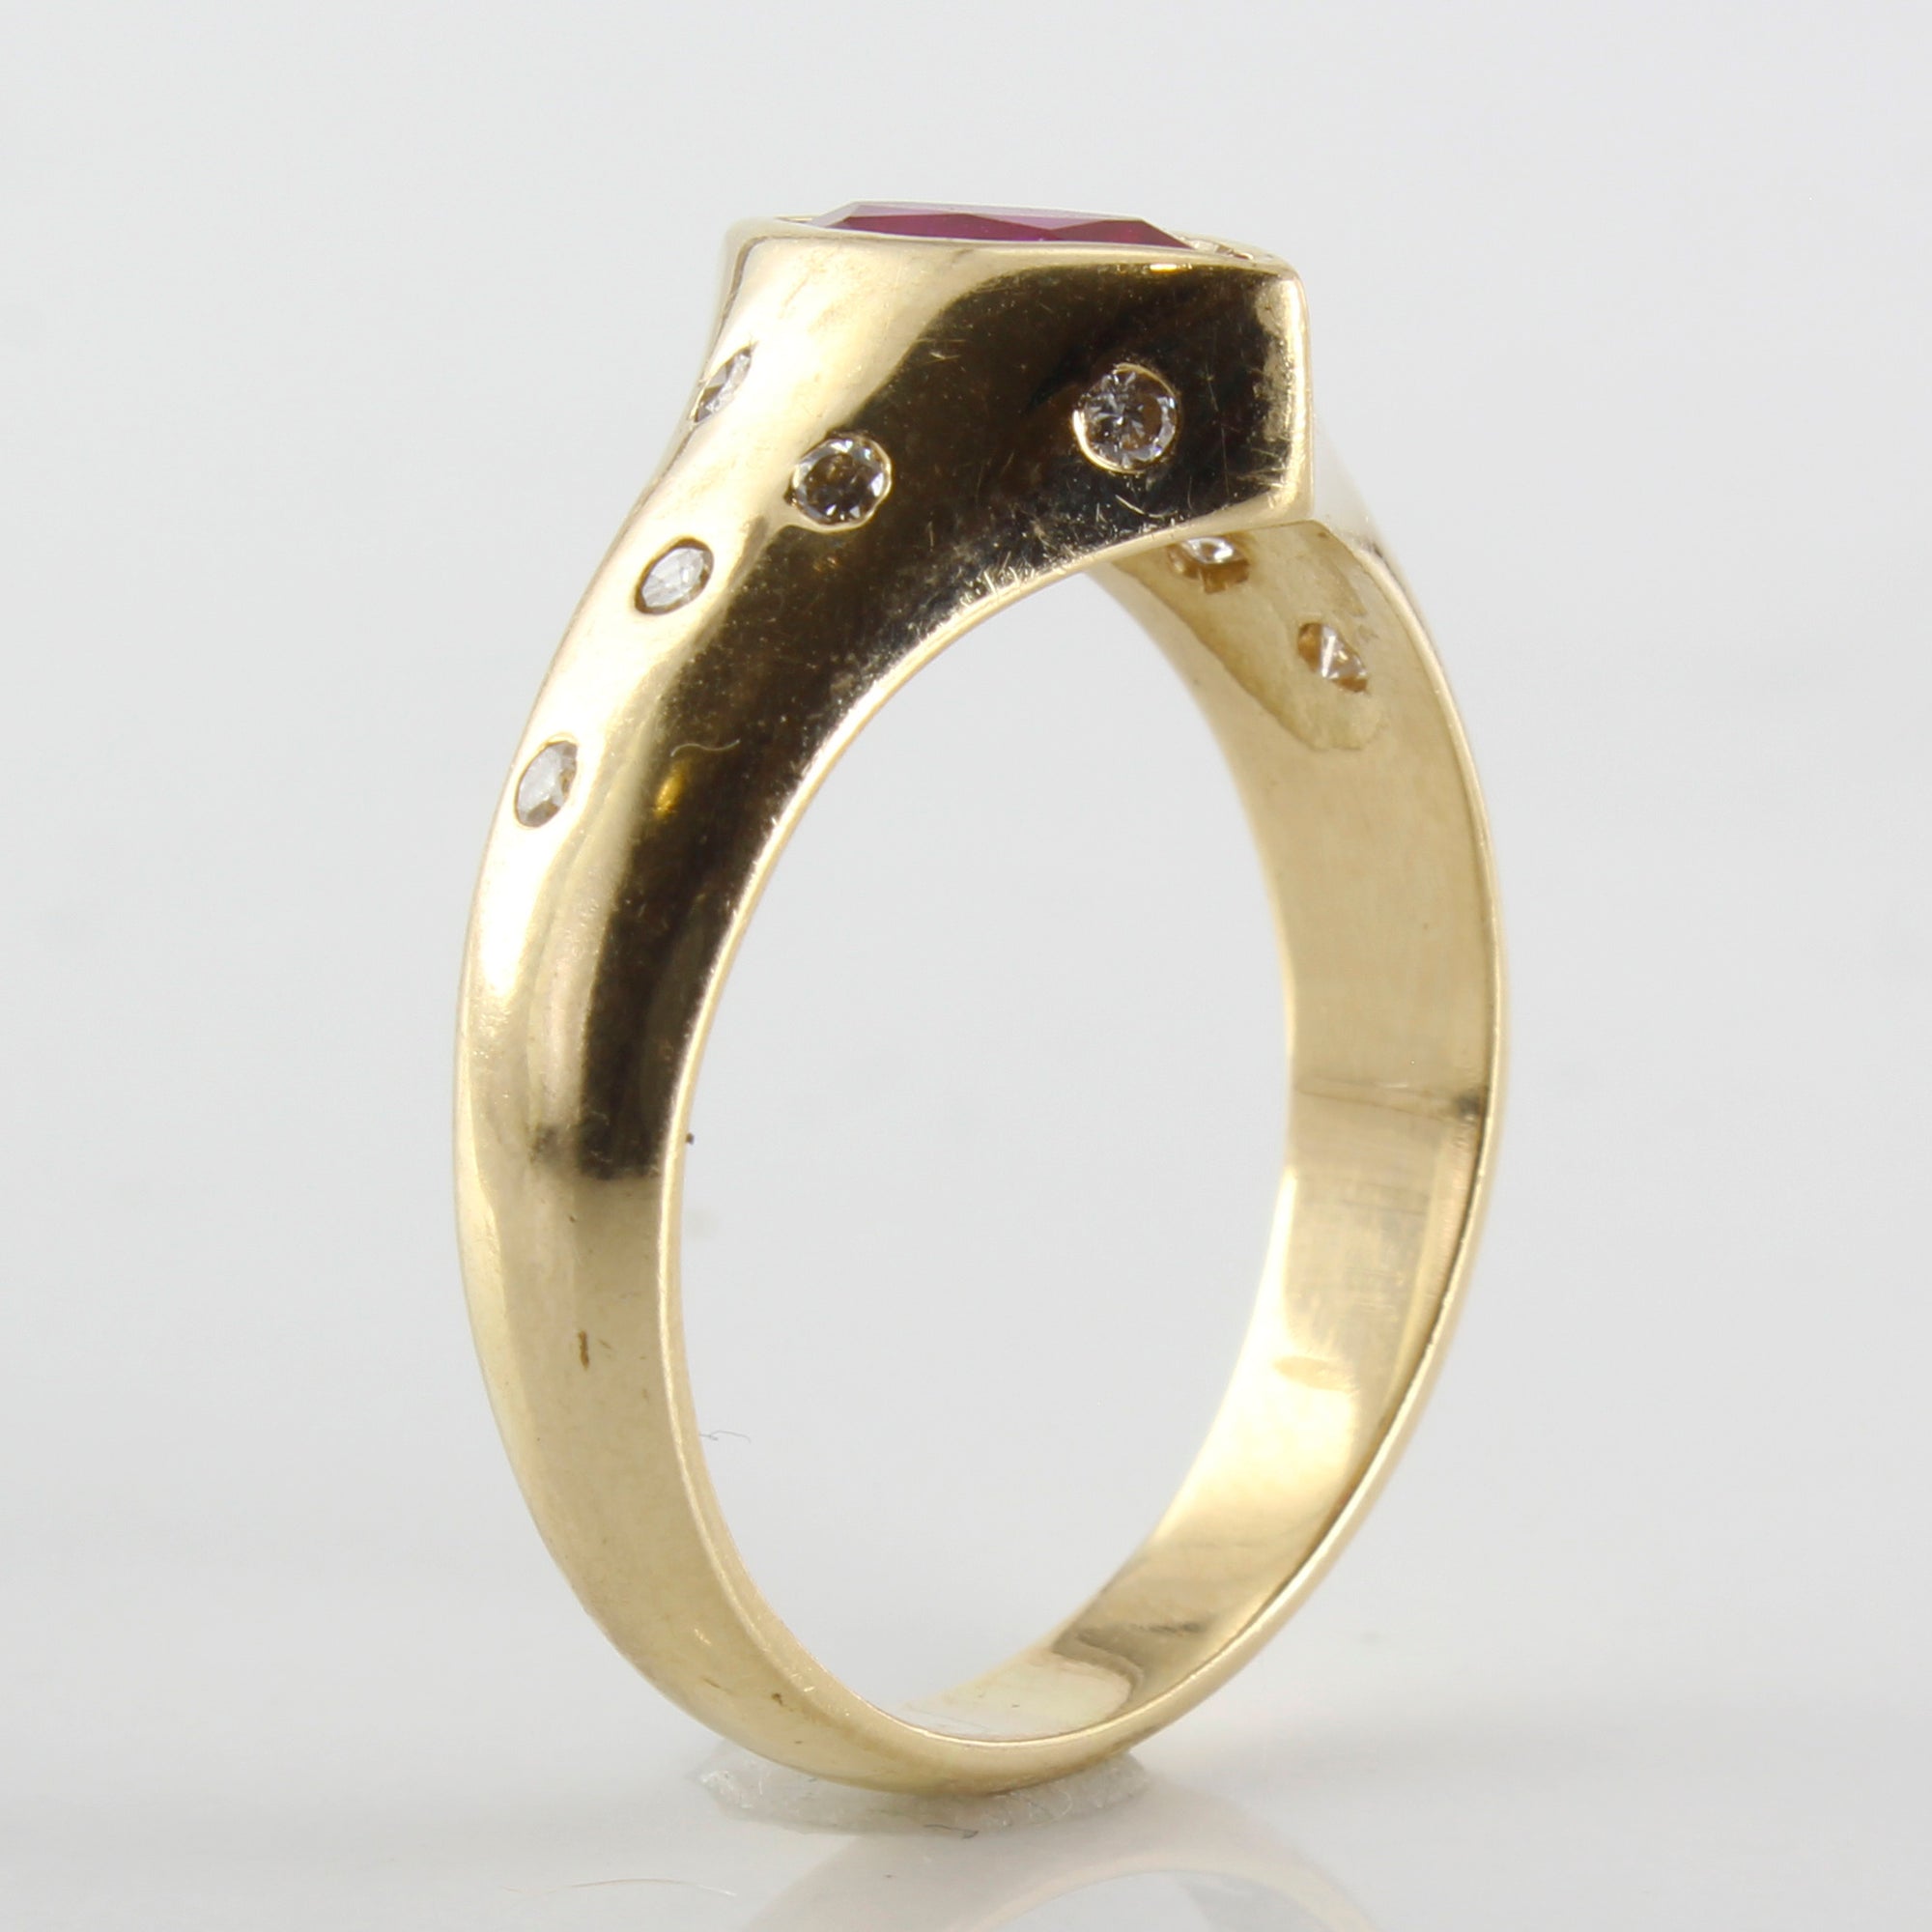 Bezel Set Marquise Ruby & Diamond Ring | 0.15ctw, 0.70ct | SZ 8 |